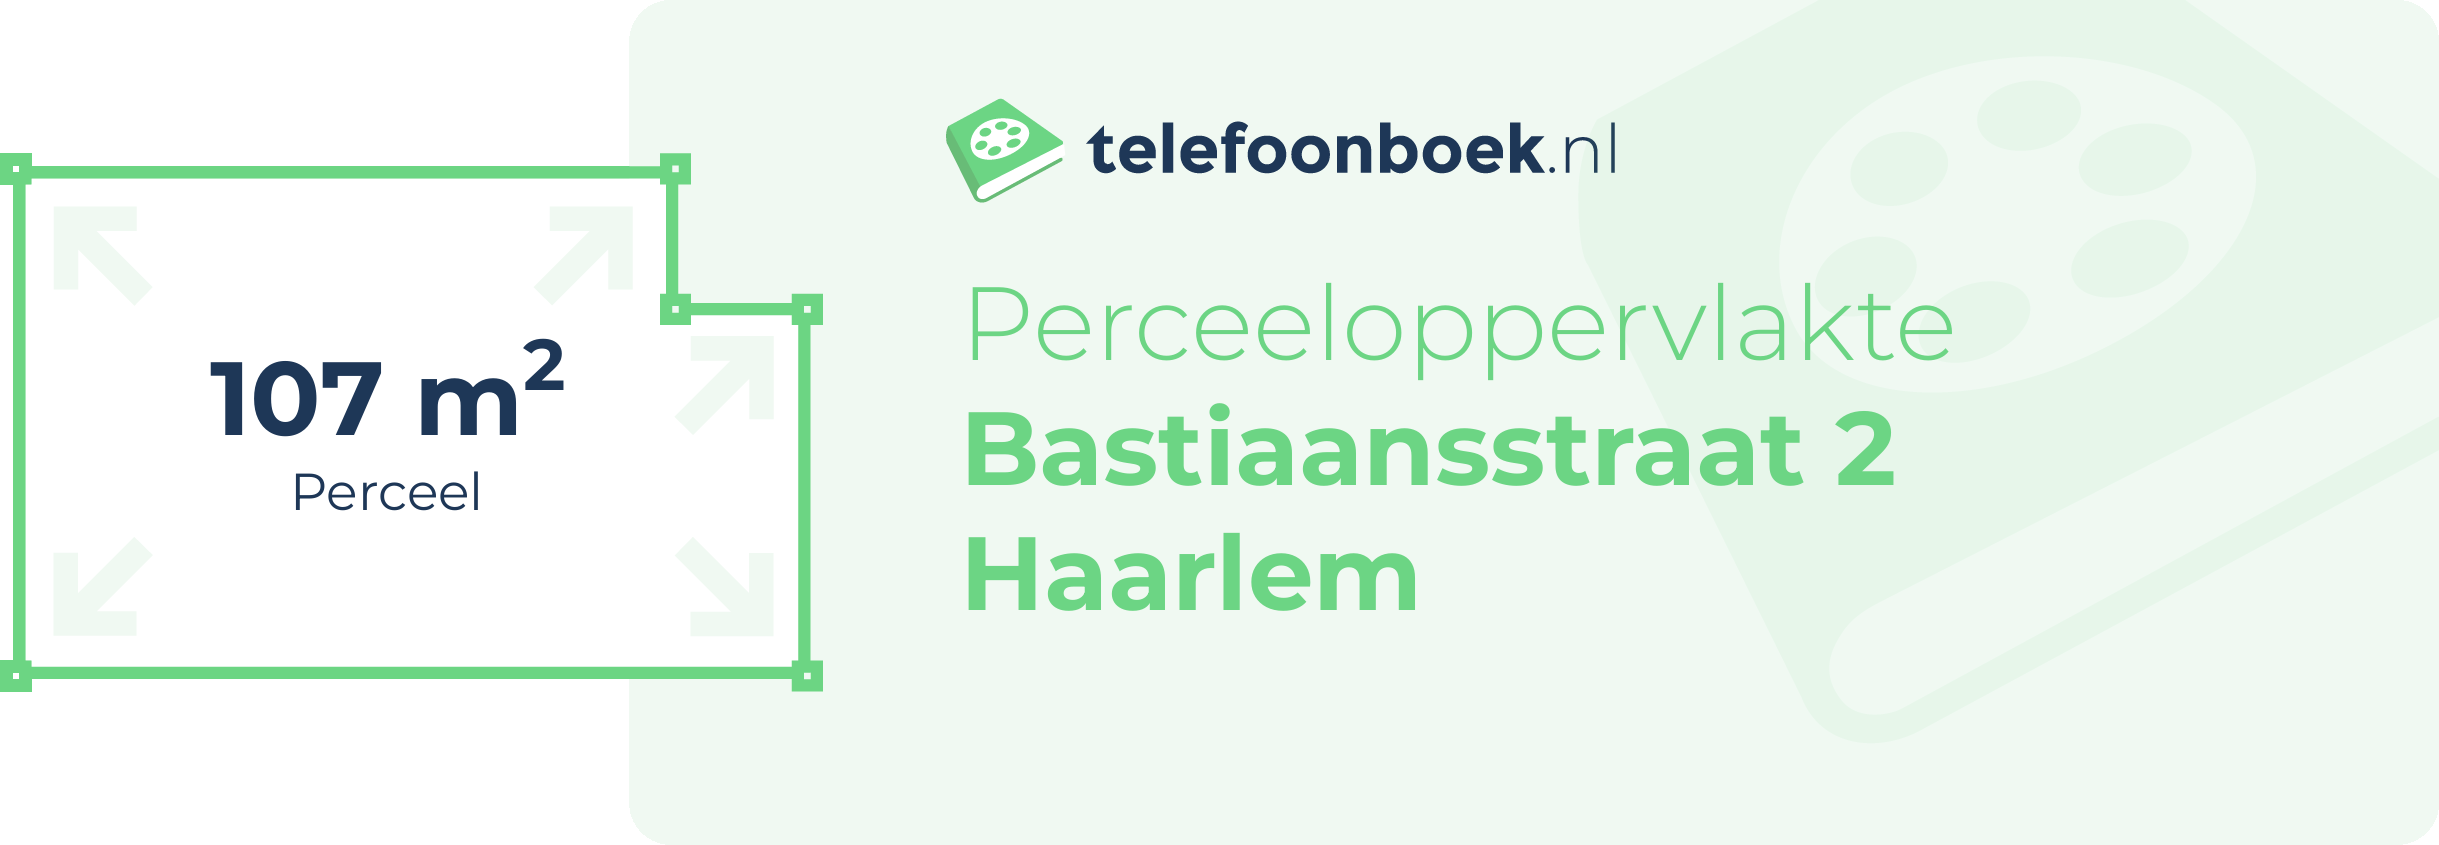 Perceeloppervlakte Bastiaansstraat 2 Haarlem